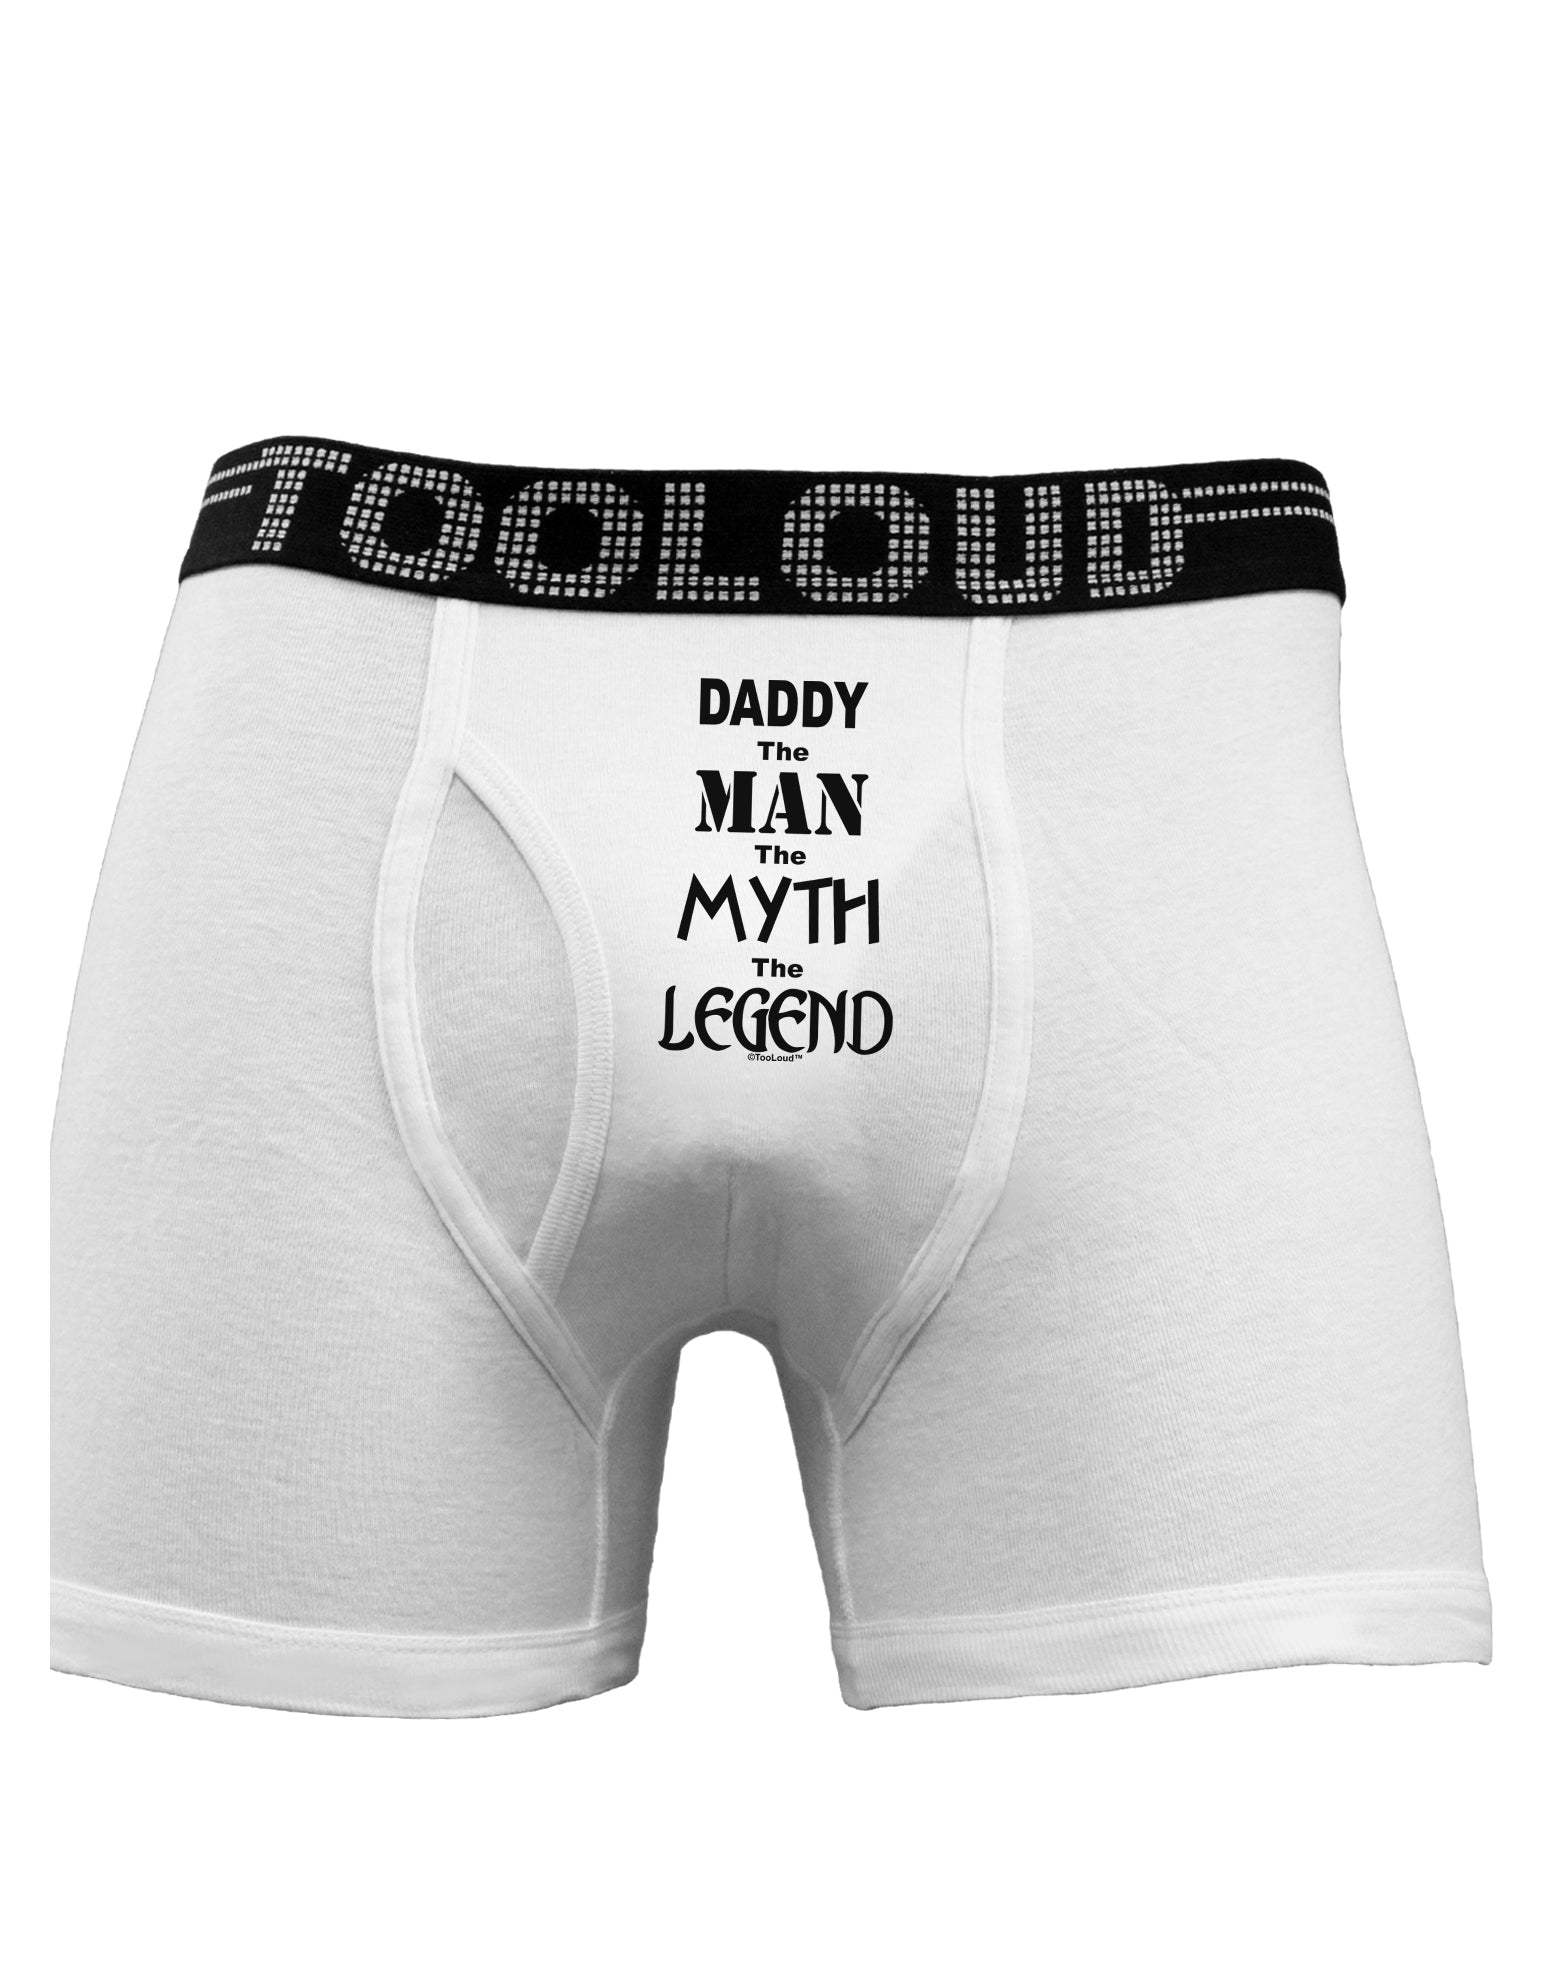 Daddy The Man The Myth The Legend Mens NDS Wear Briefs Underwear